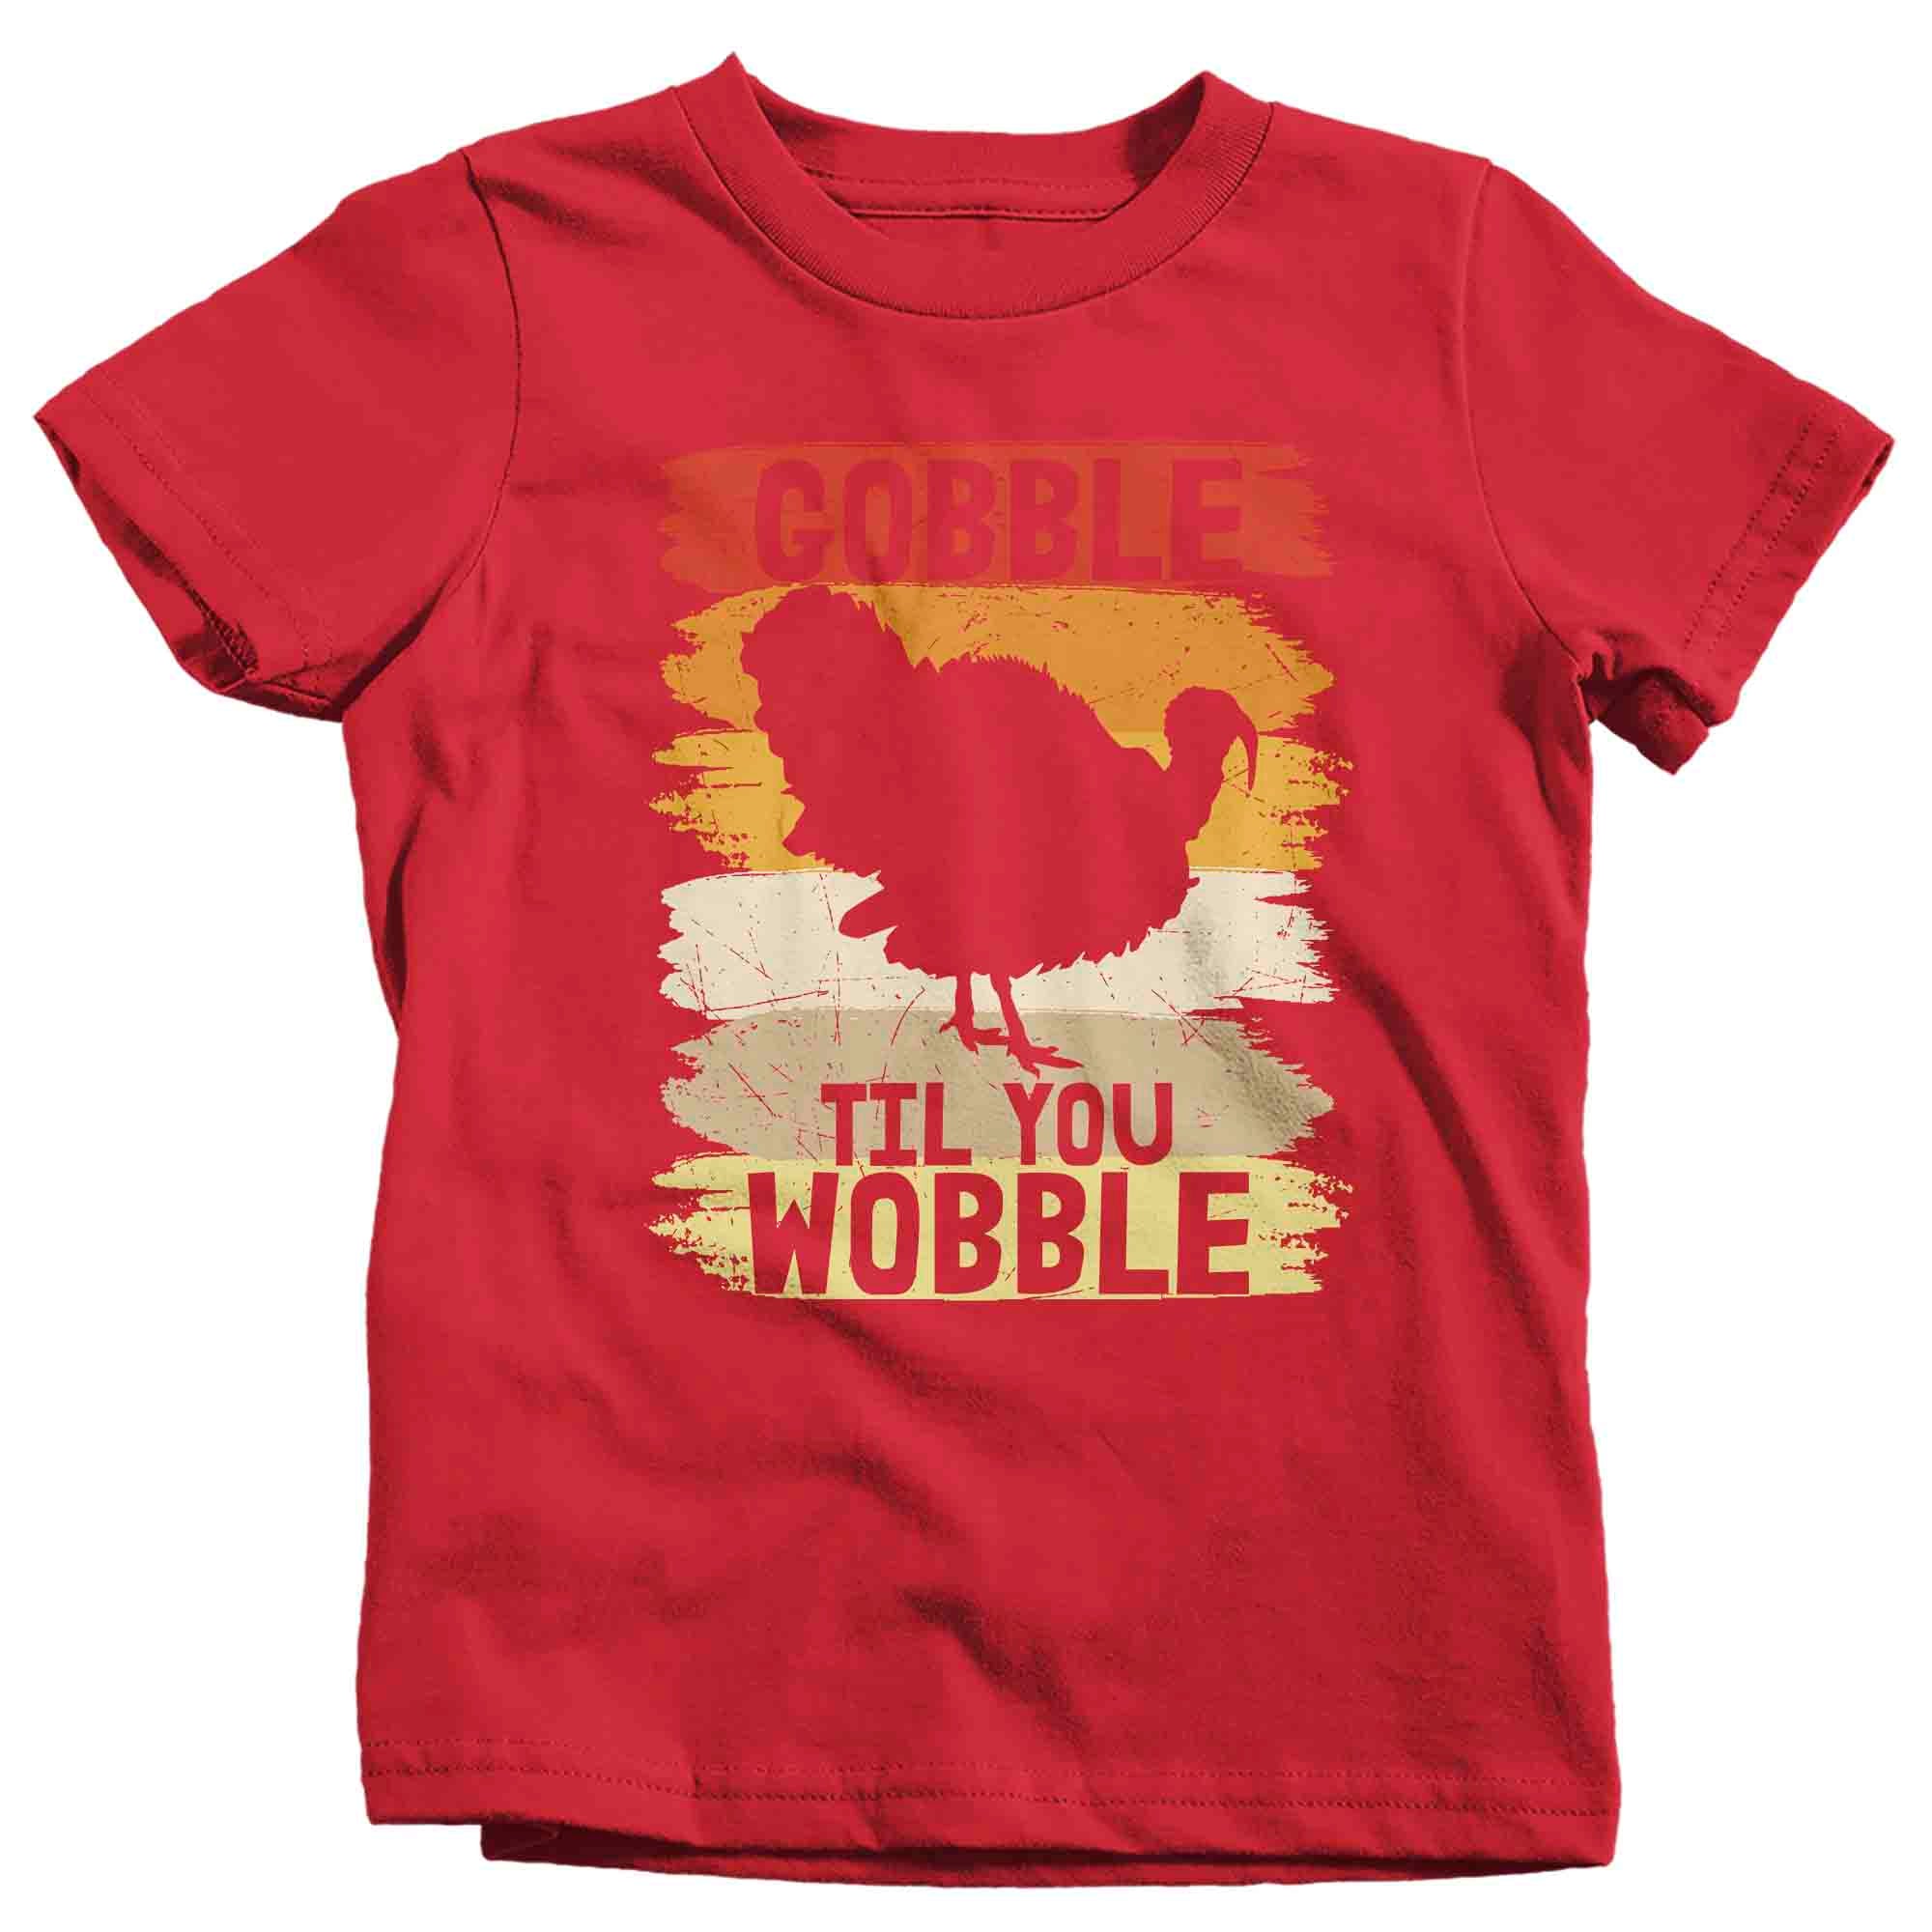 Kids Funny Thanksgiving TShirt Gobble Til You Wobble Shirts Vintage T Shirt Holiday Tee Unisex Soft 